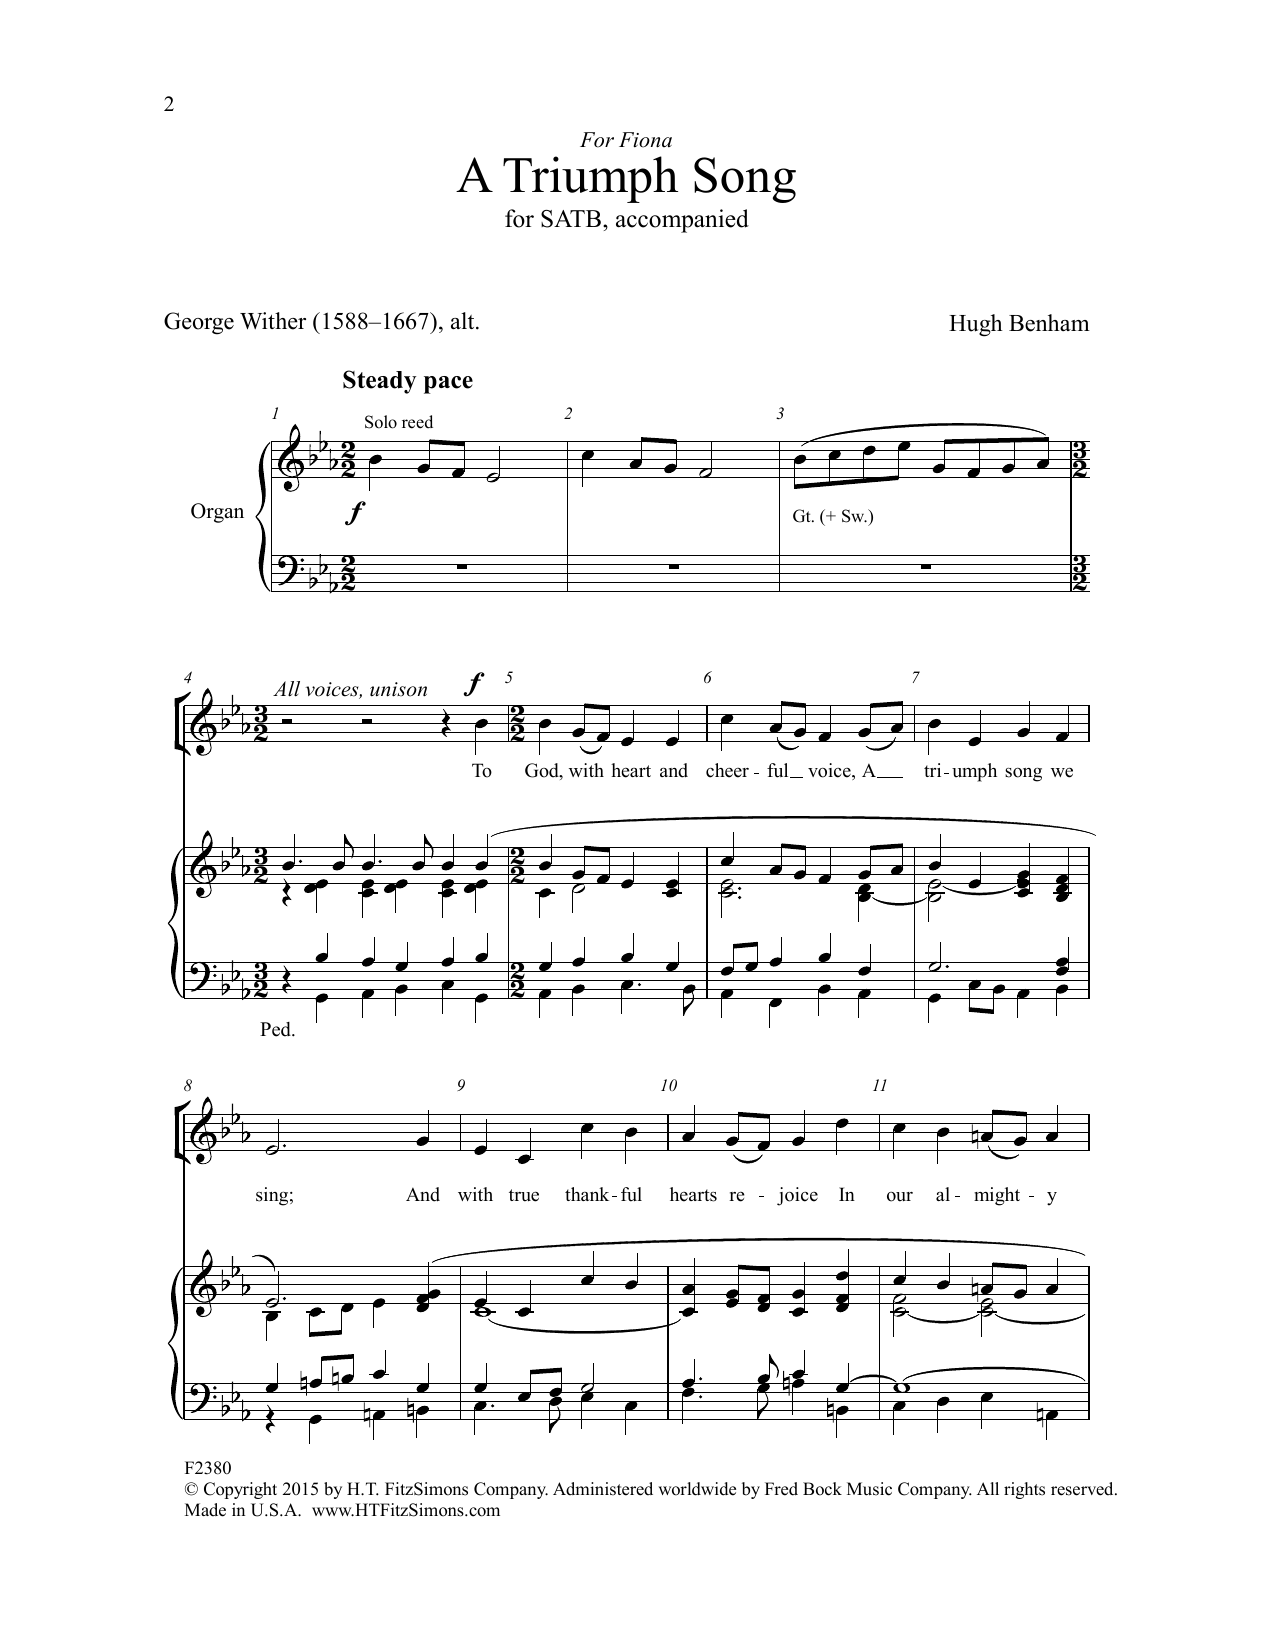 Download Hugh Benham A Triumph Song Sheet Music and learn how to play SATB Choir PDF digital score in minutes